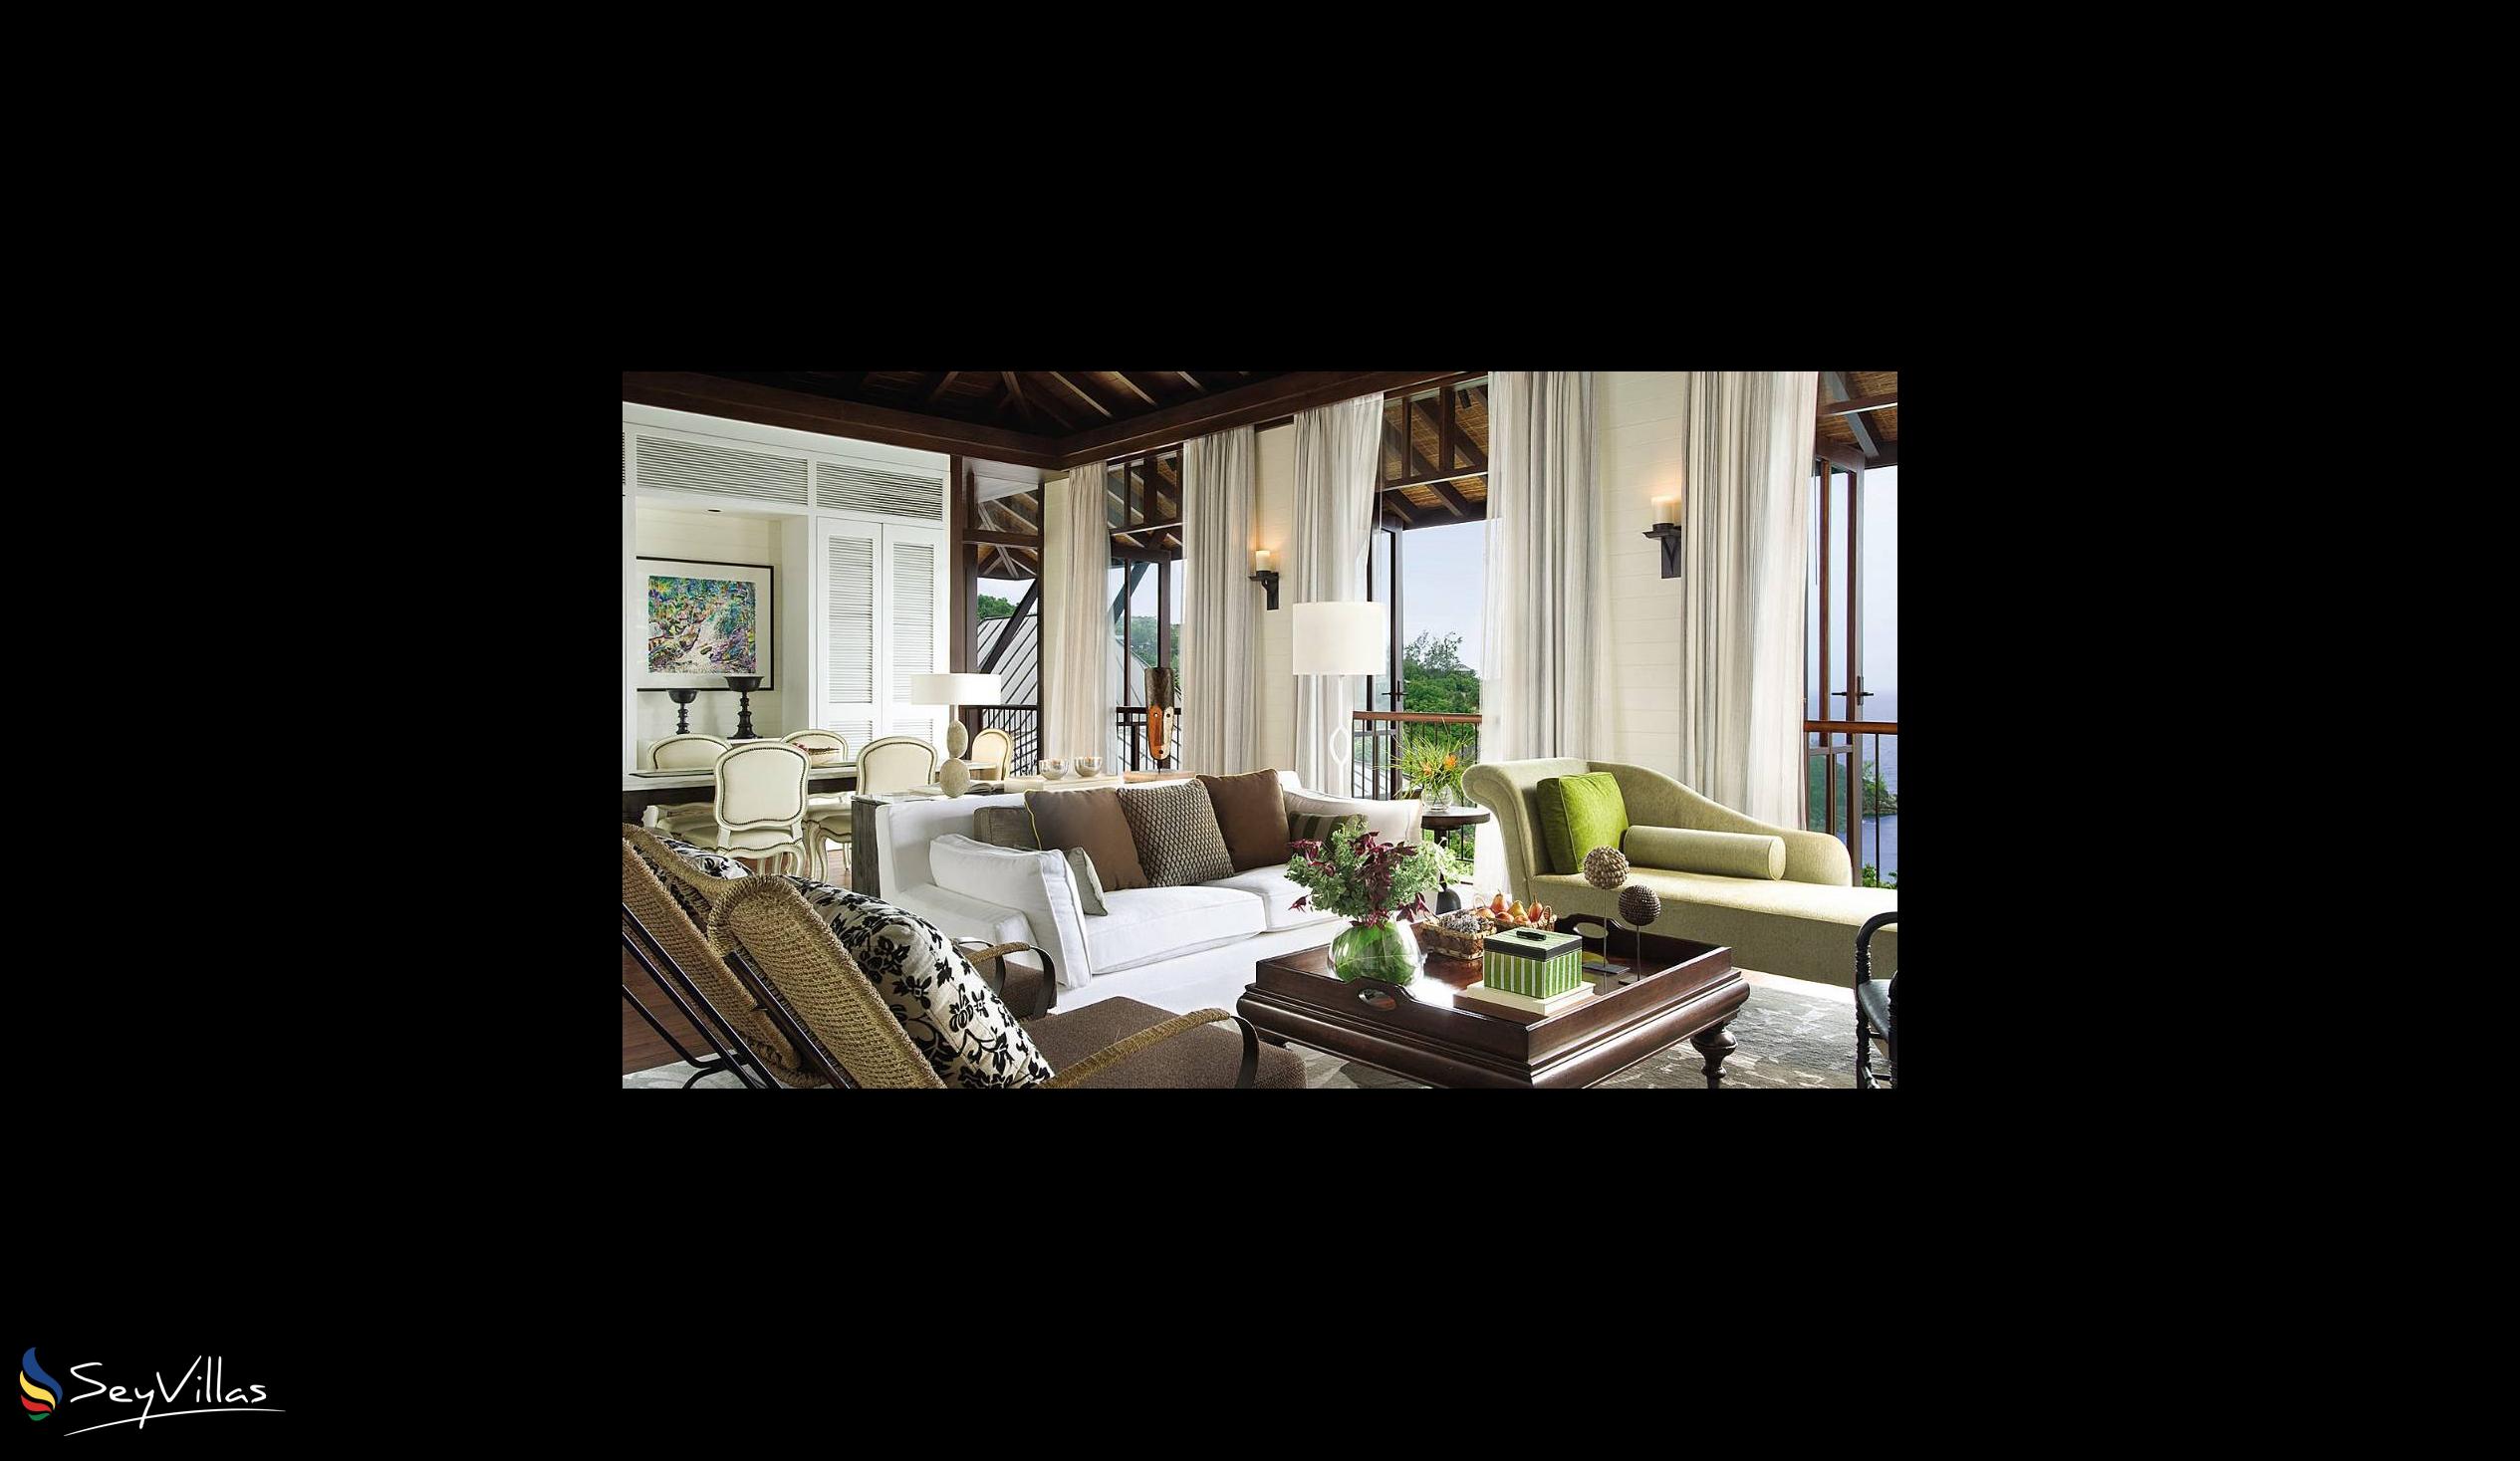 Foto 25: Four Seasons Resort - 2-Bedroom Hilltop Ocean View Suite - Mahé (Seychelles)